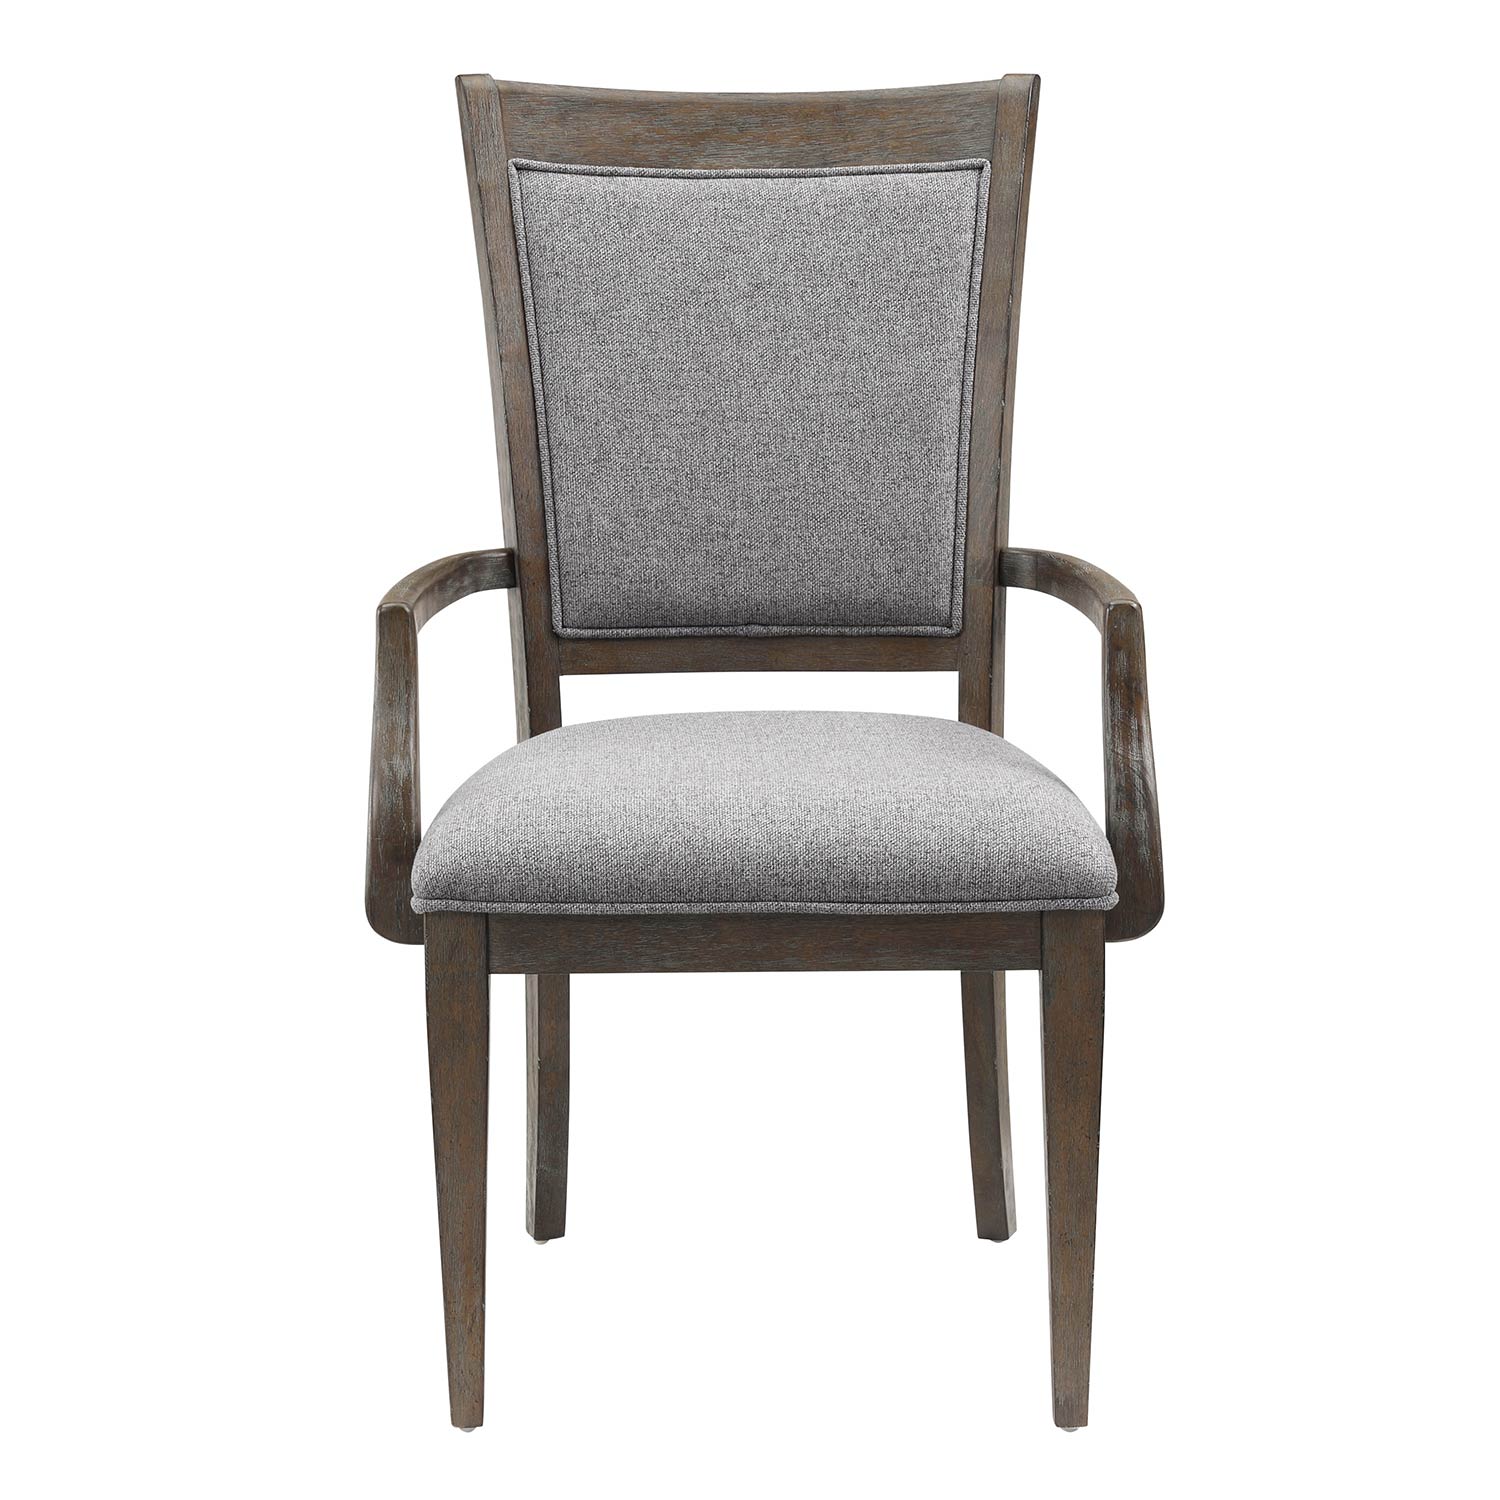 Homelegance Sarasota Arm Chair - Driftwood Gray